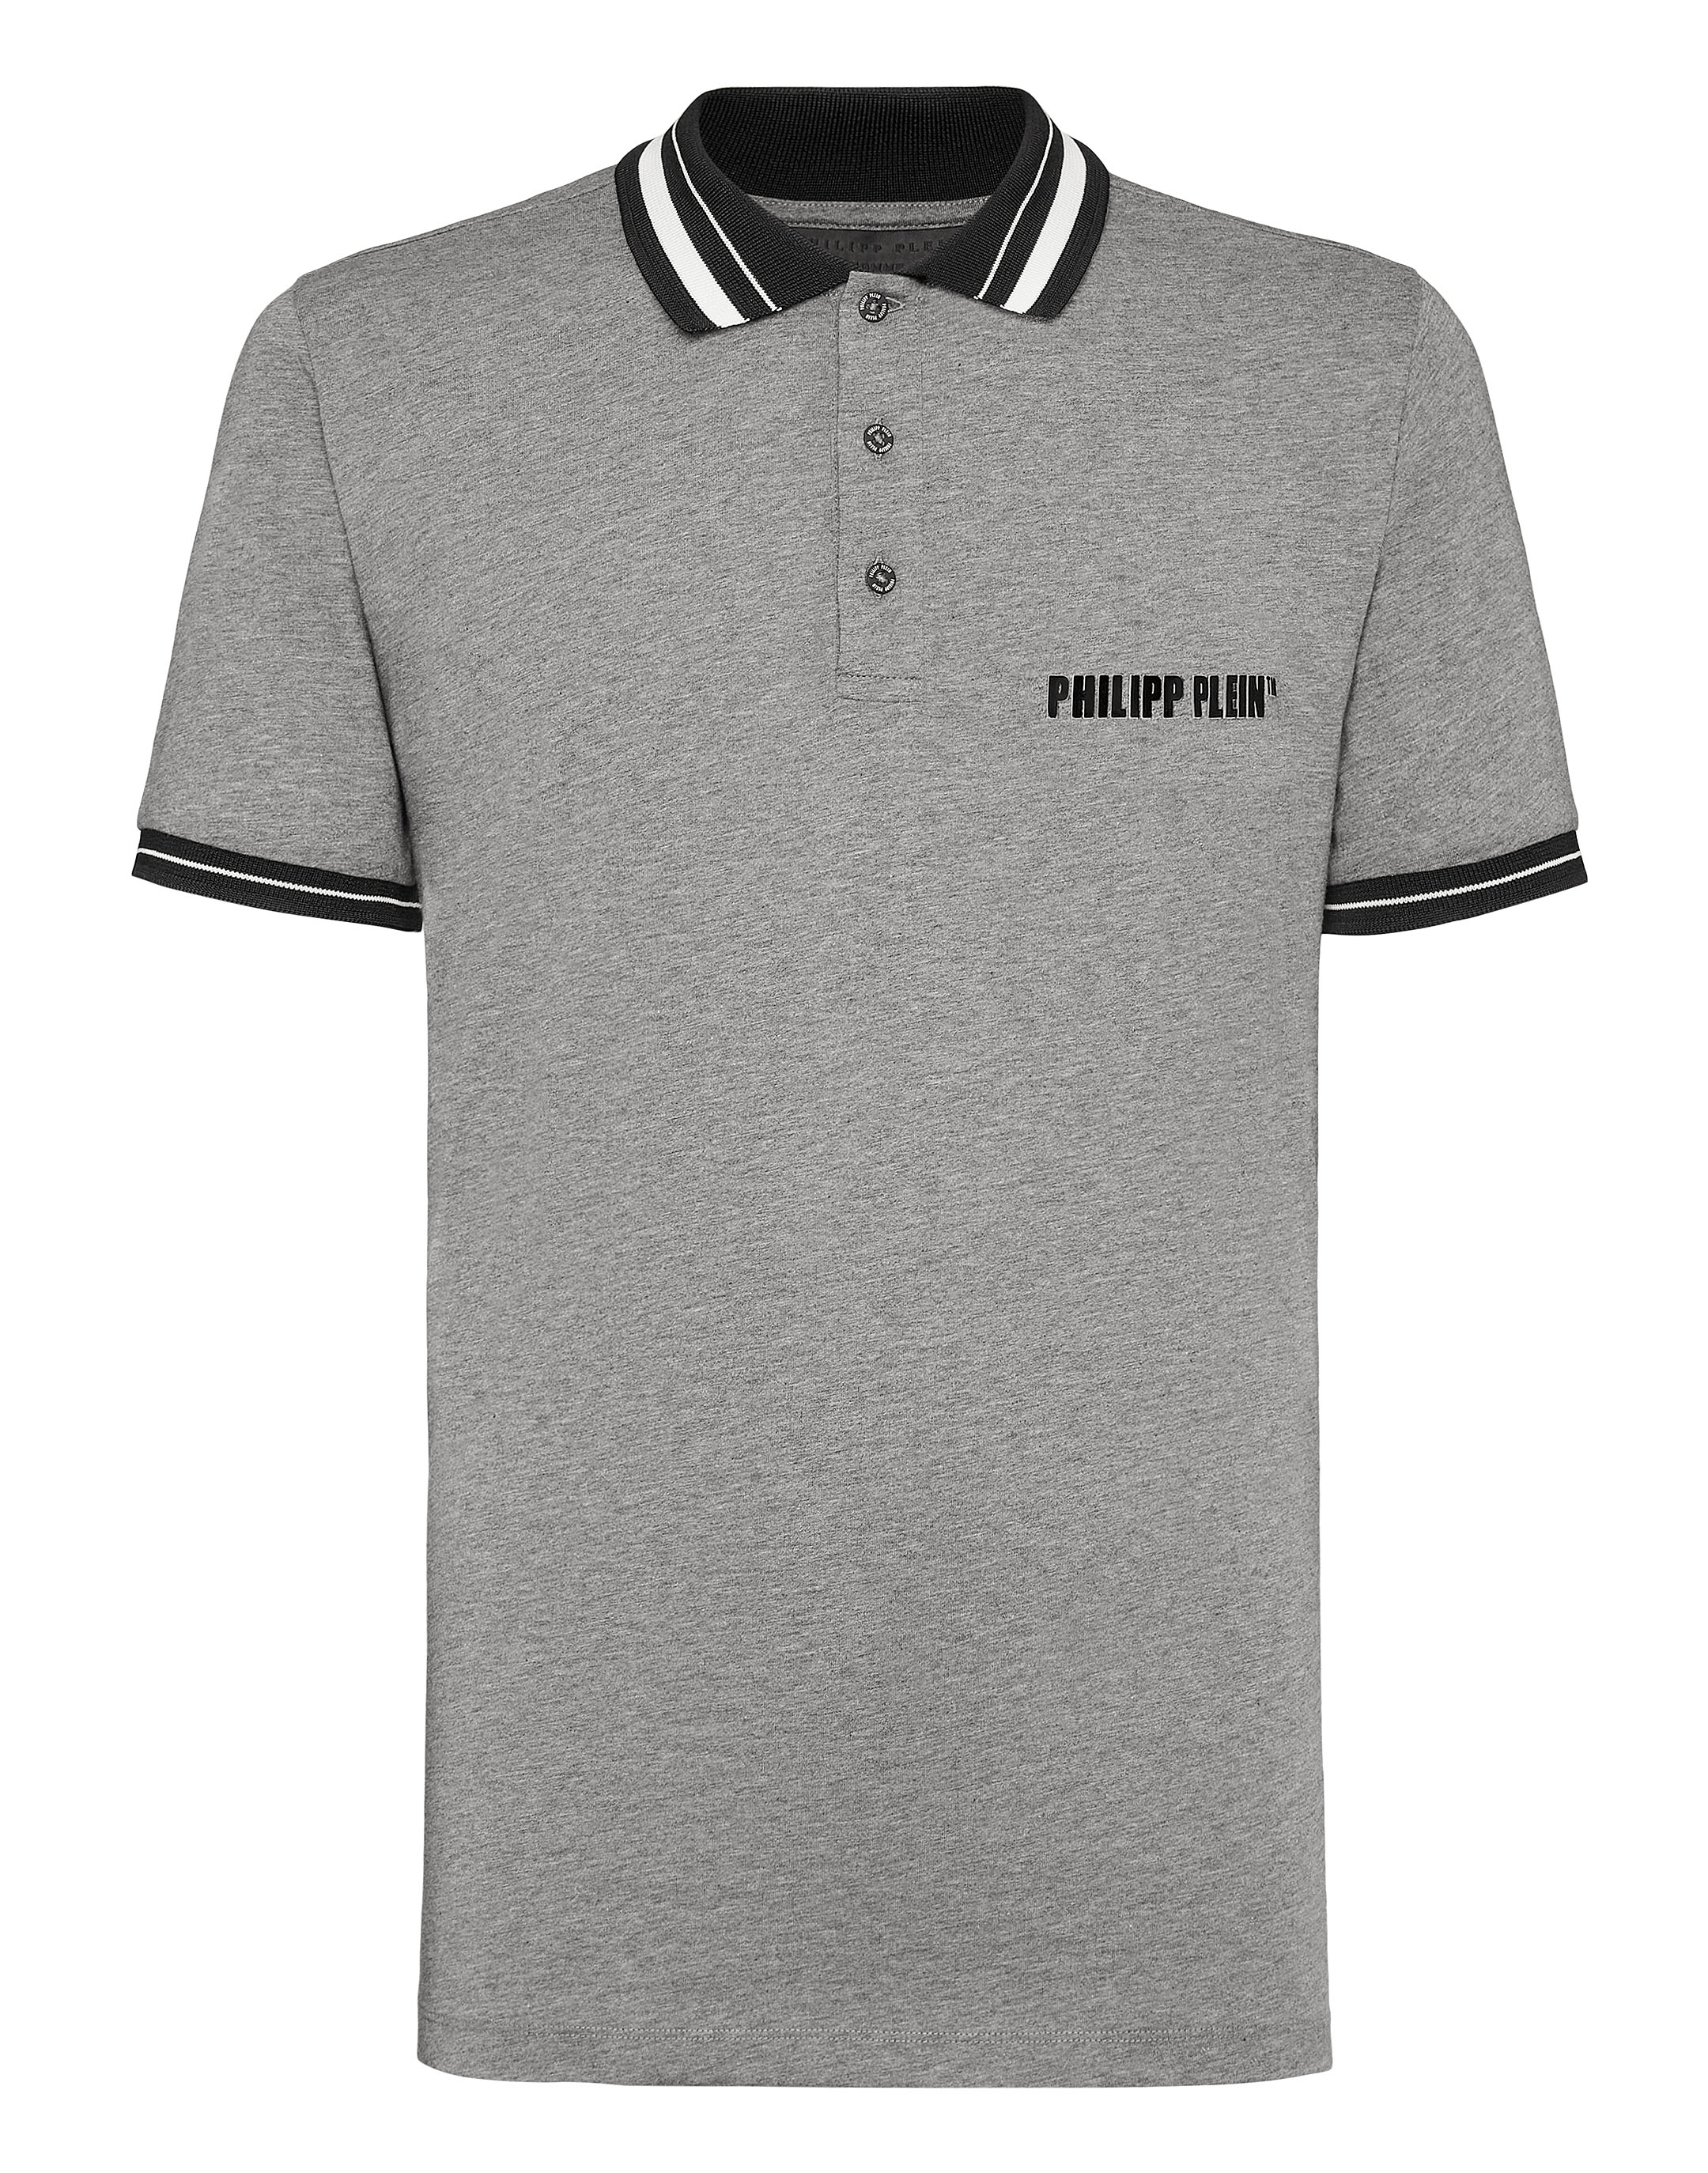 Polo shirt SS Philipp Plein TM 